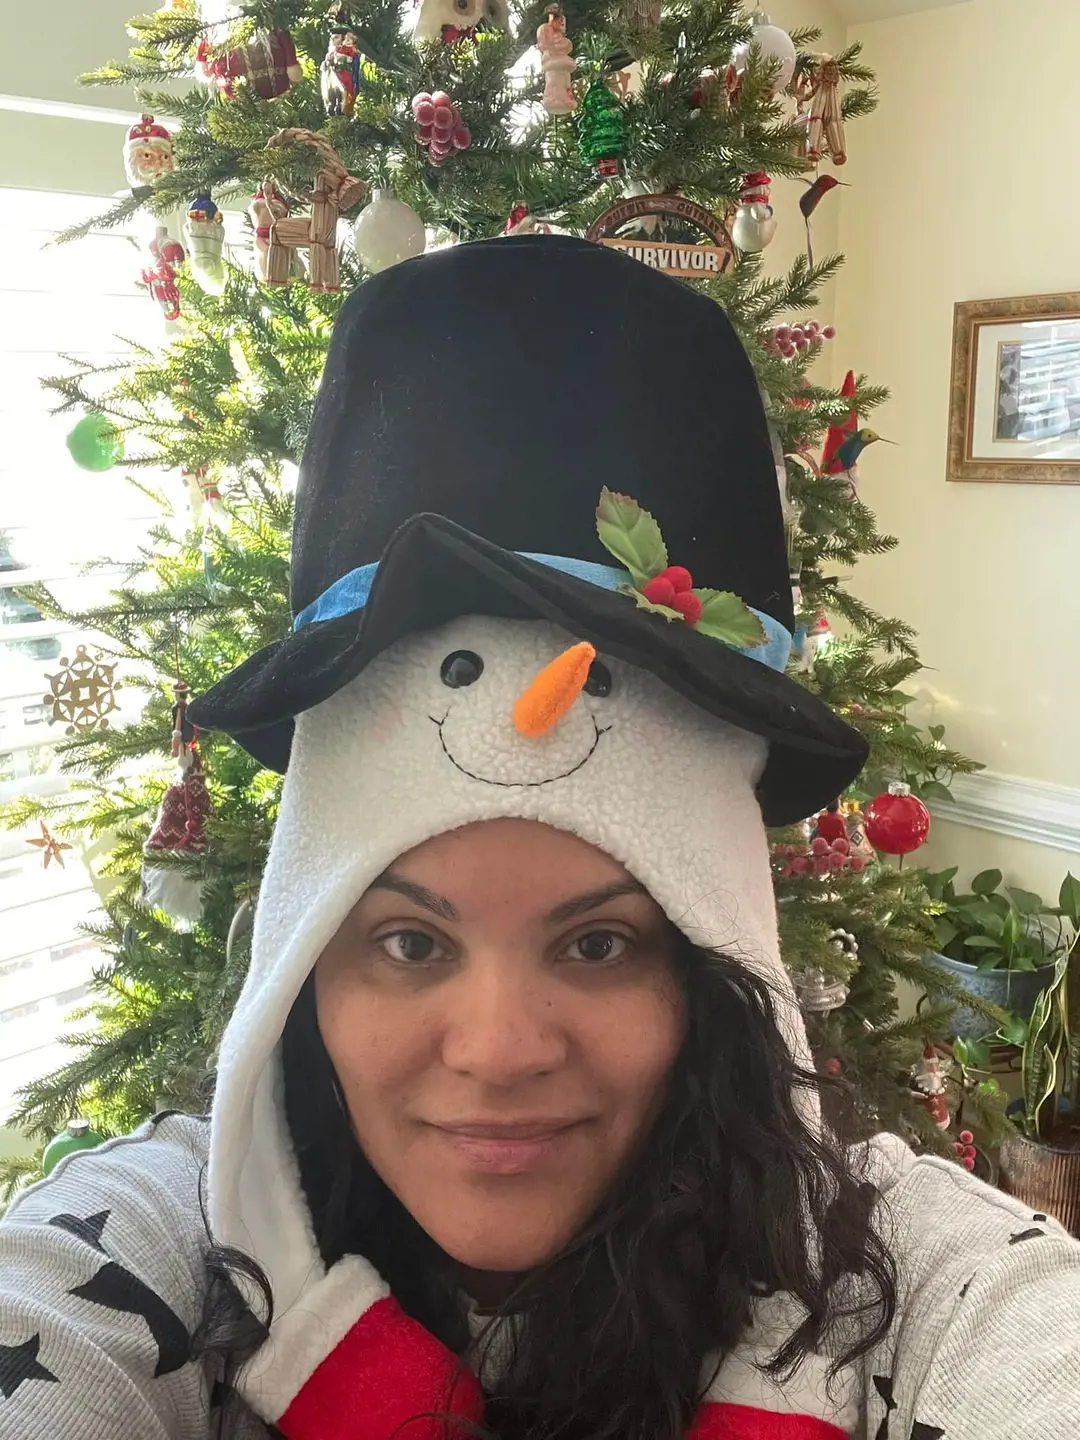 Sandra took an adorable selfie wishing her followers a Merry Christmas